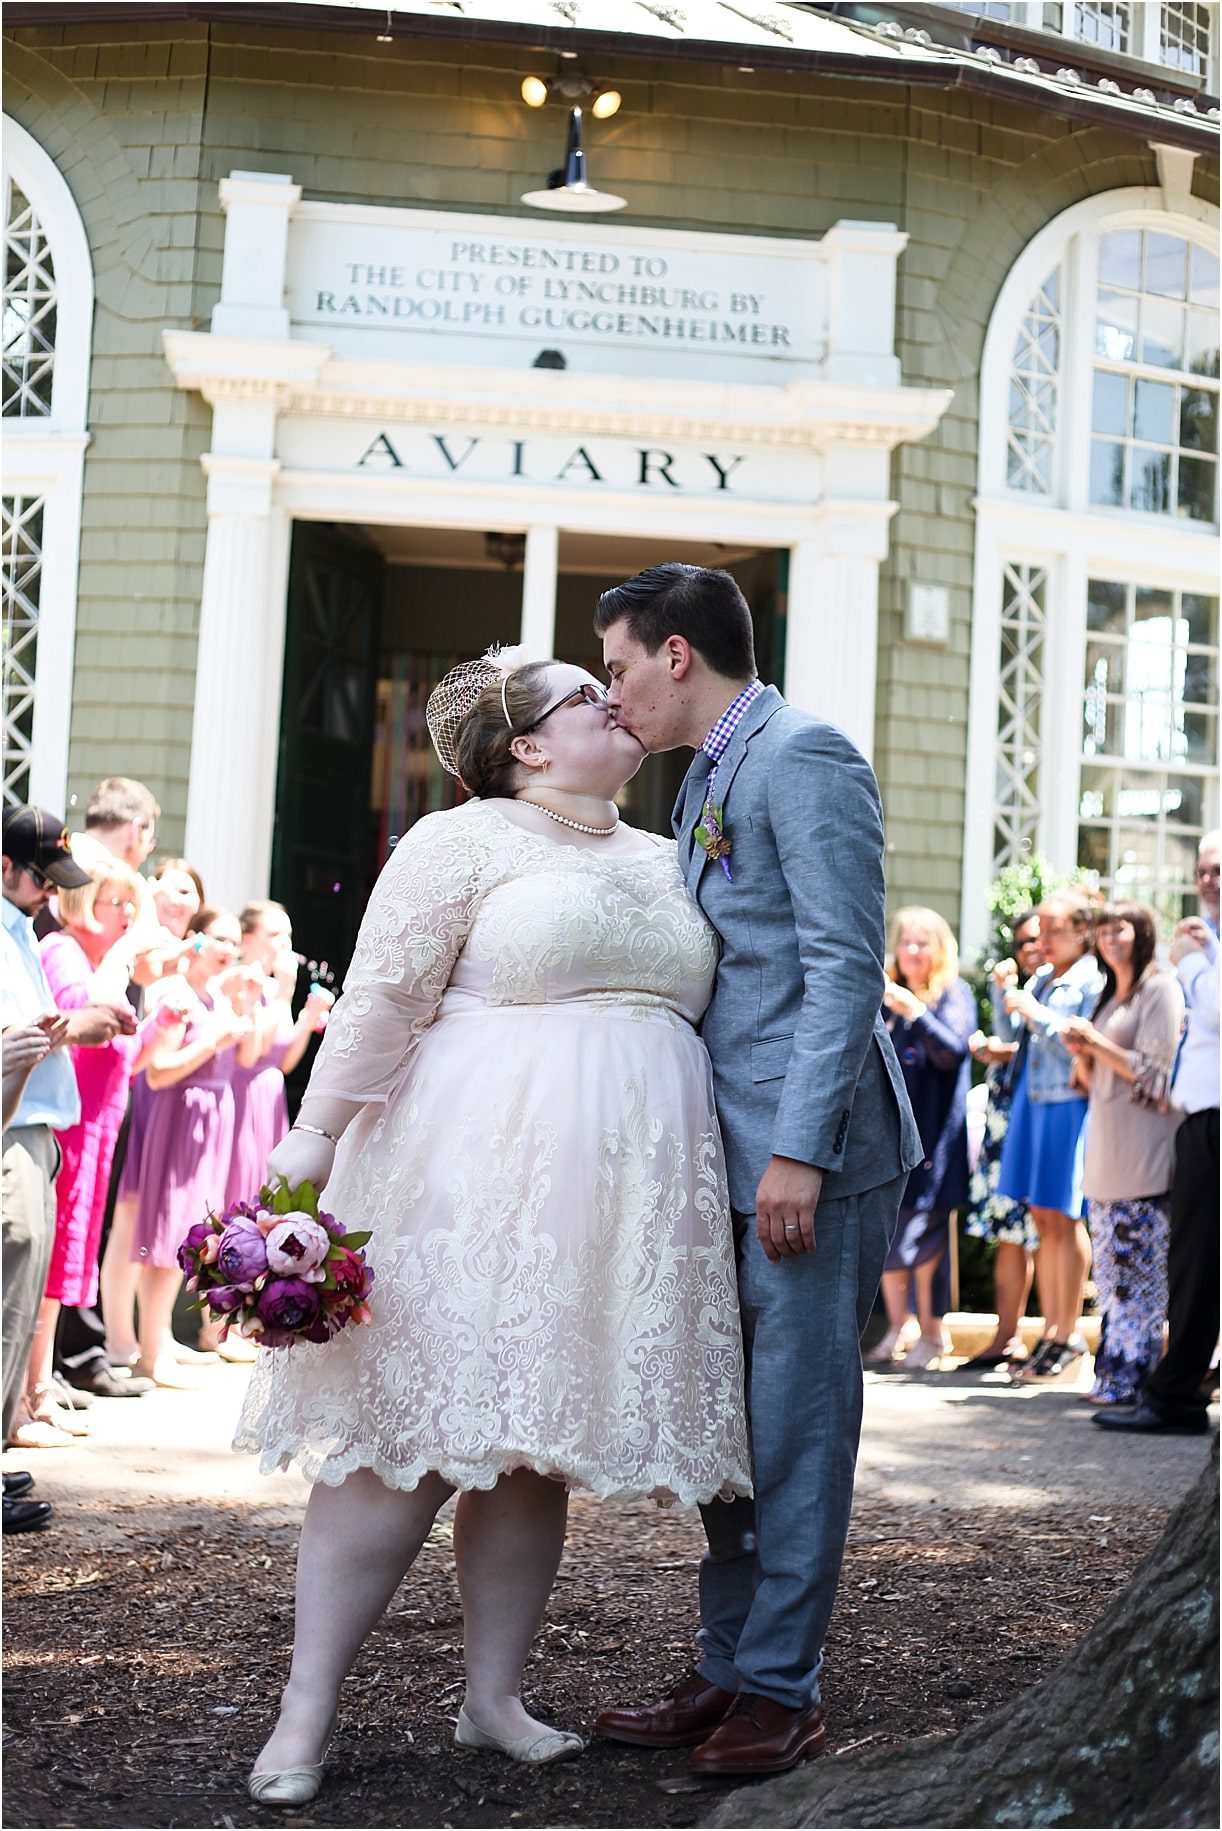 Favorites from Wedding Bloggers | Hill City Bride Virginia Wedding Blog